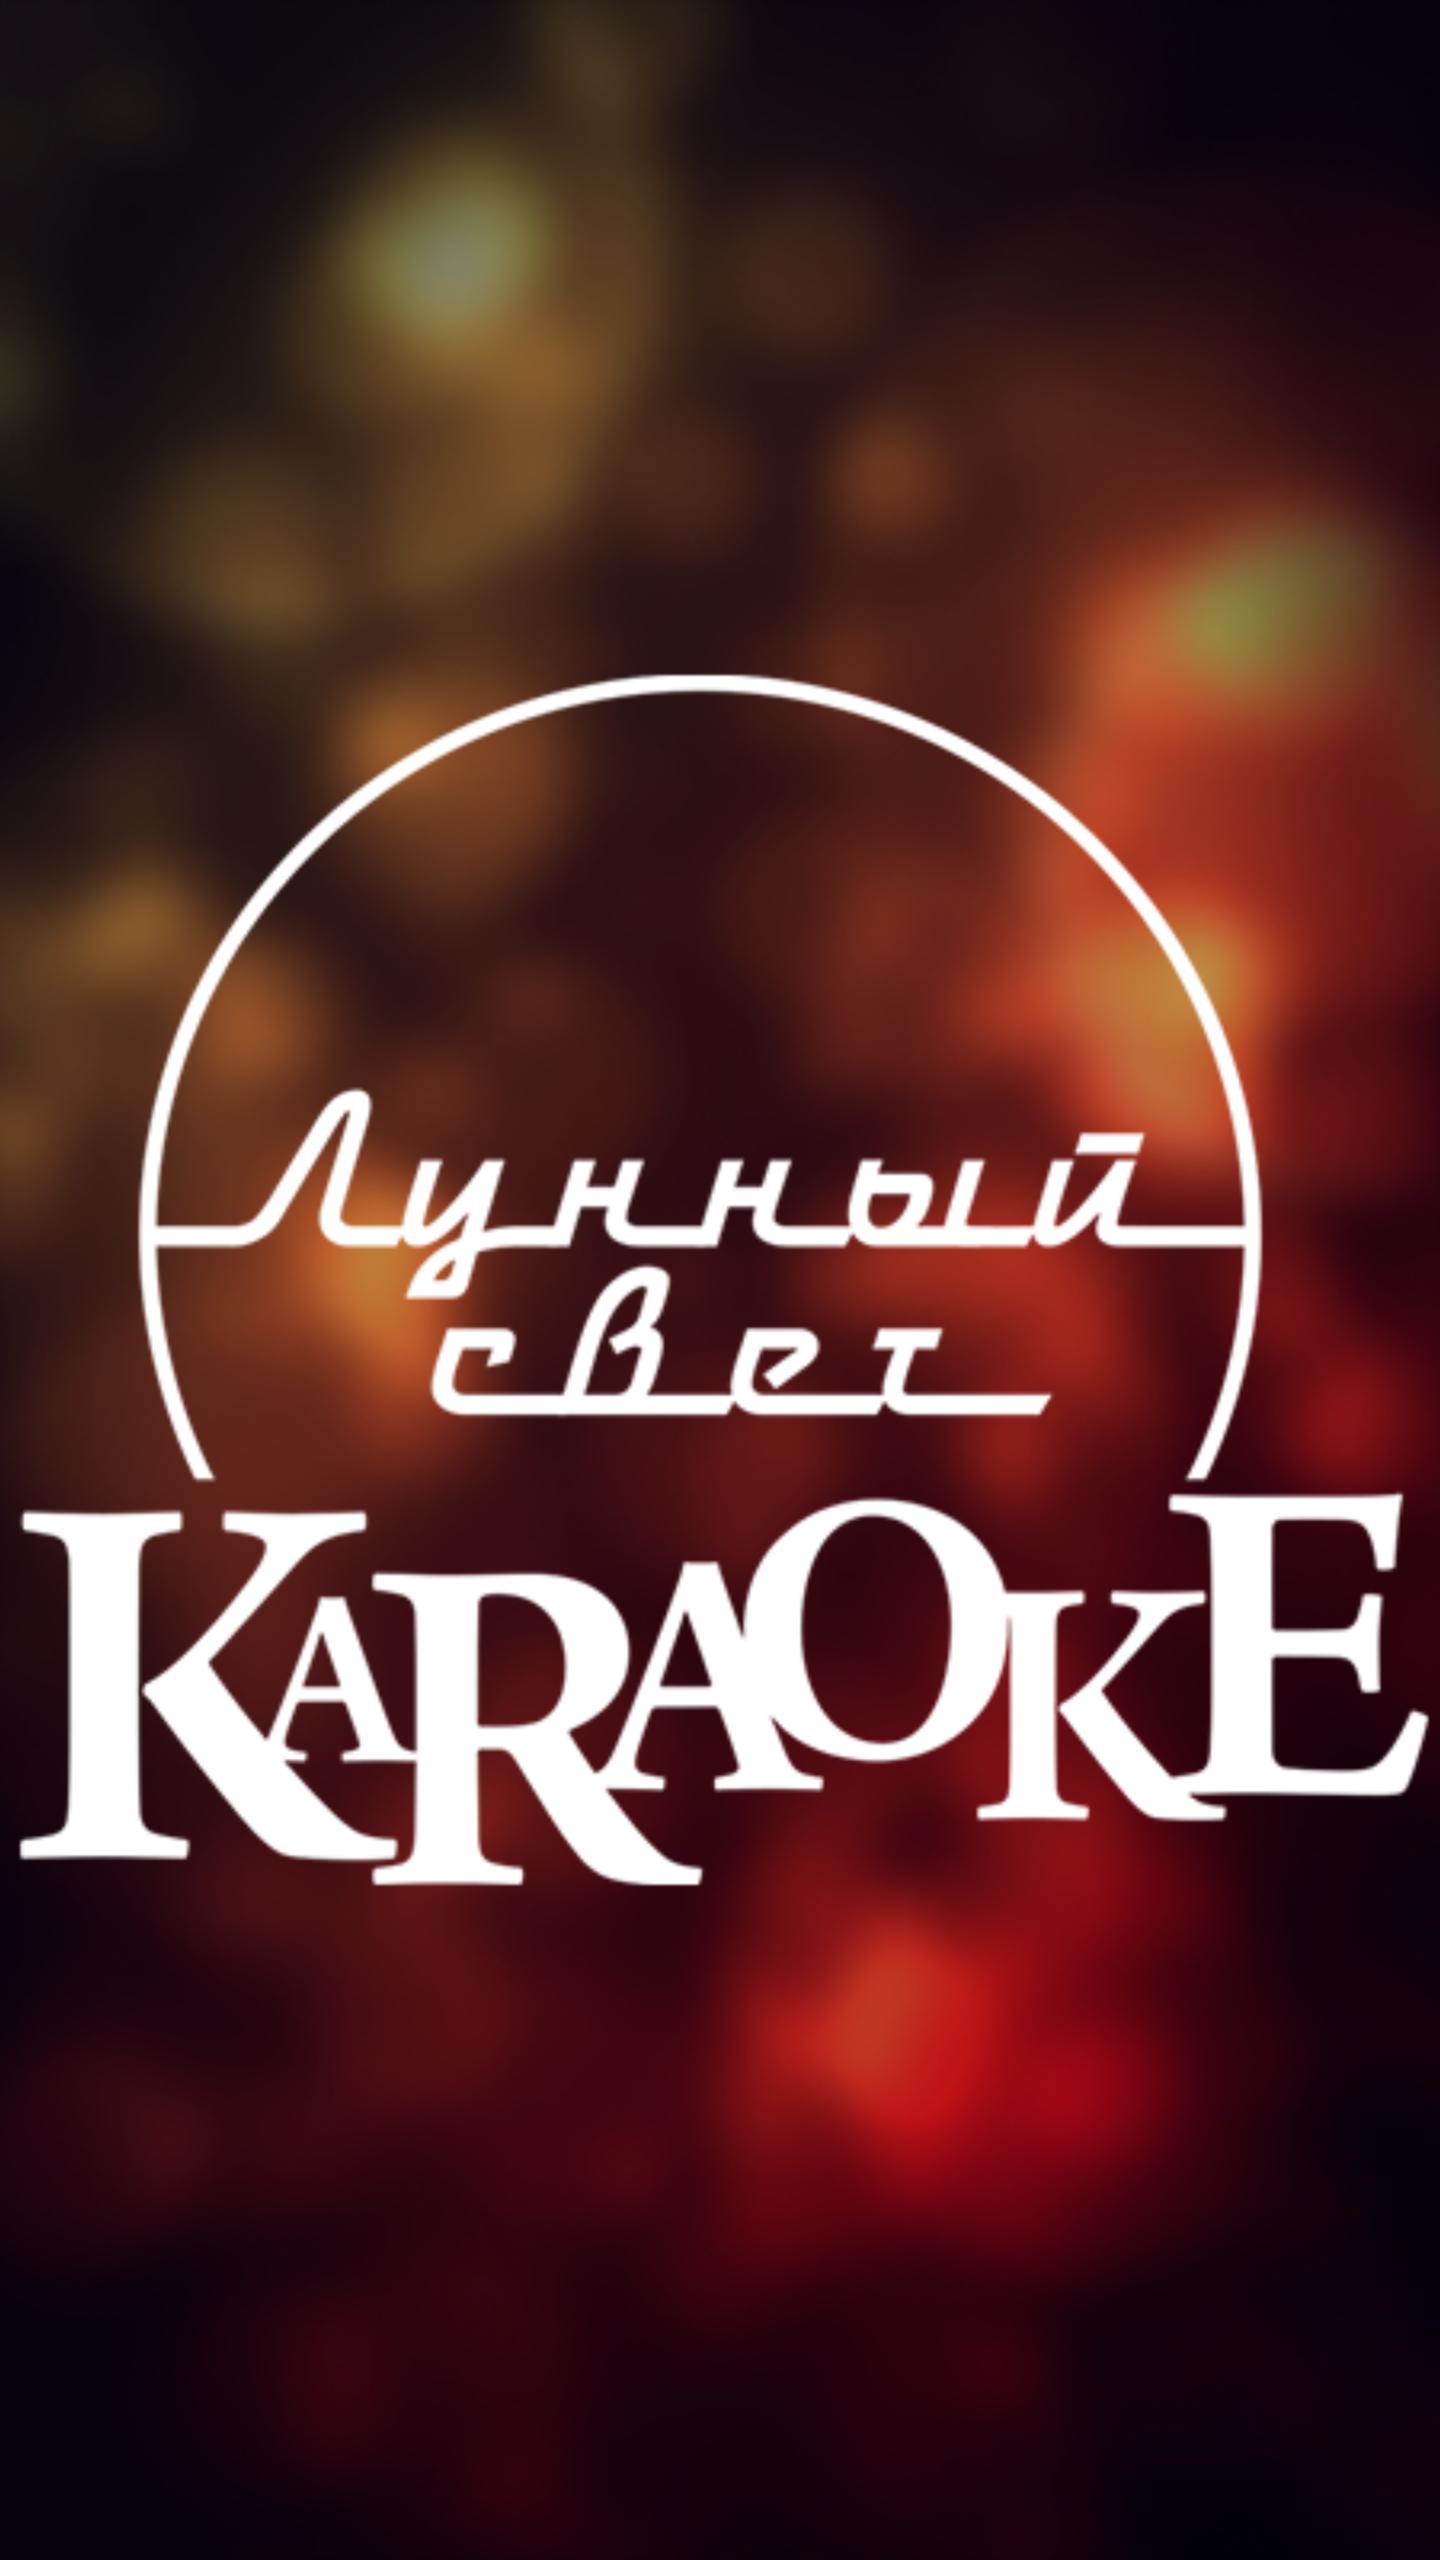 Света караоке. Лунный свет Челябинск. Karaoke Restaurant poster. Караоке света как мне жить. Караоке светка